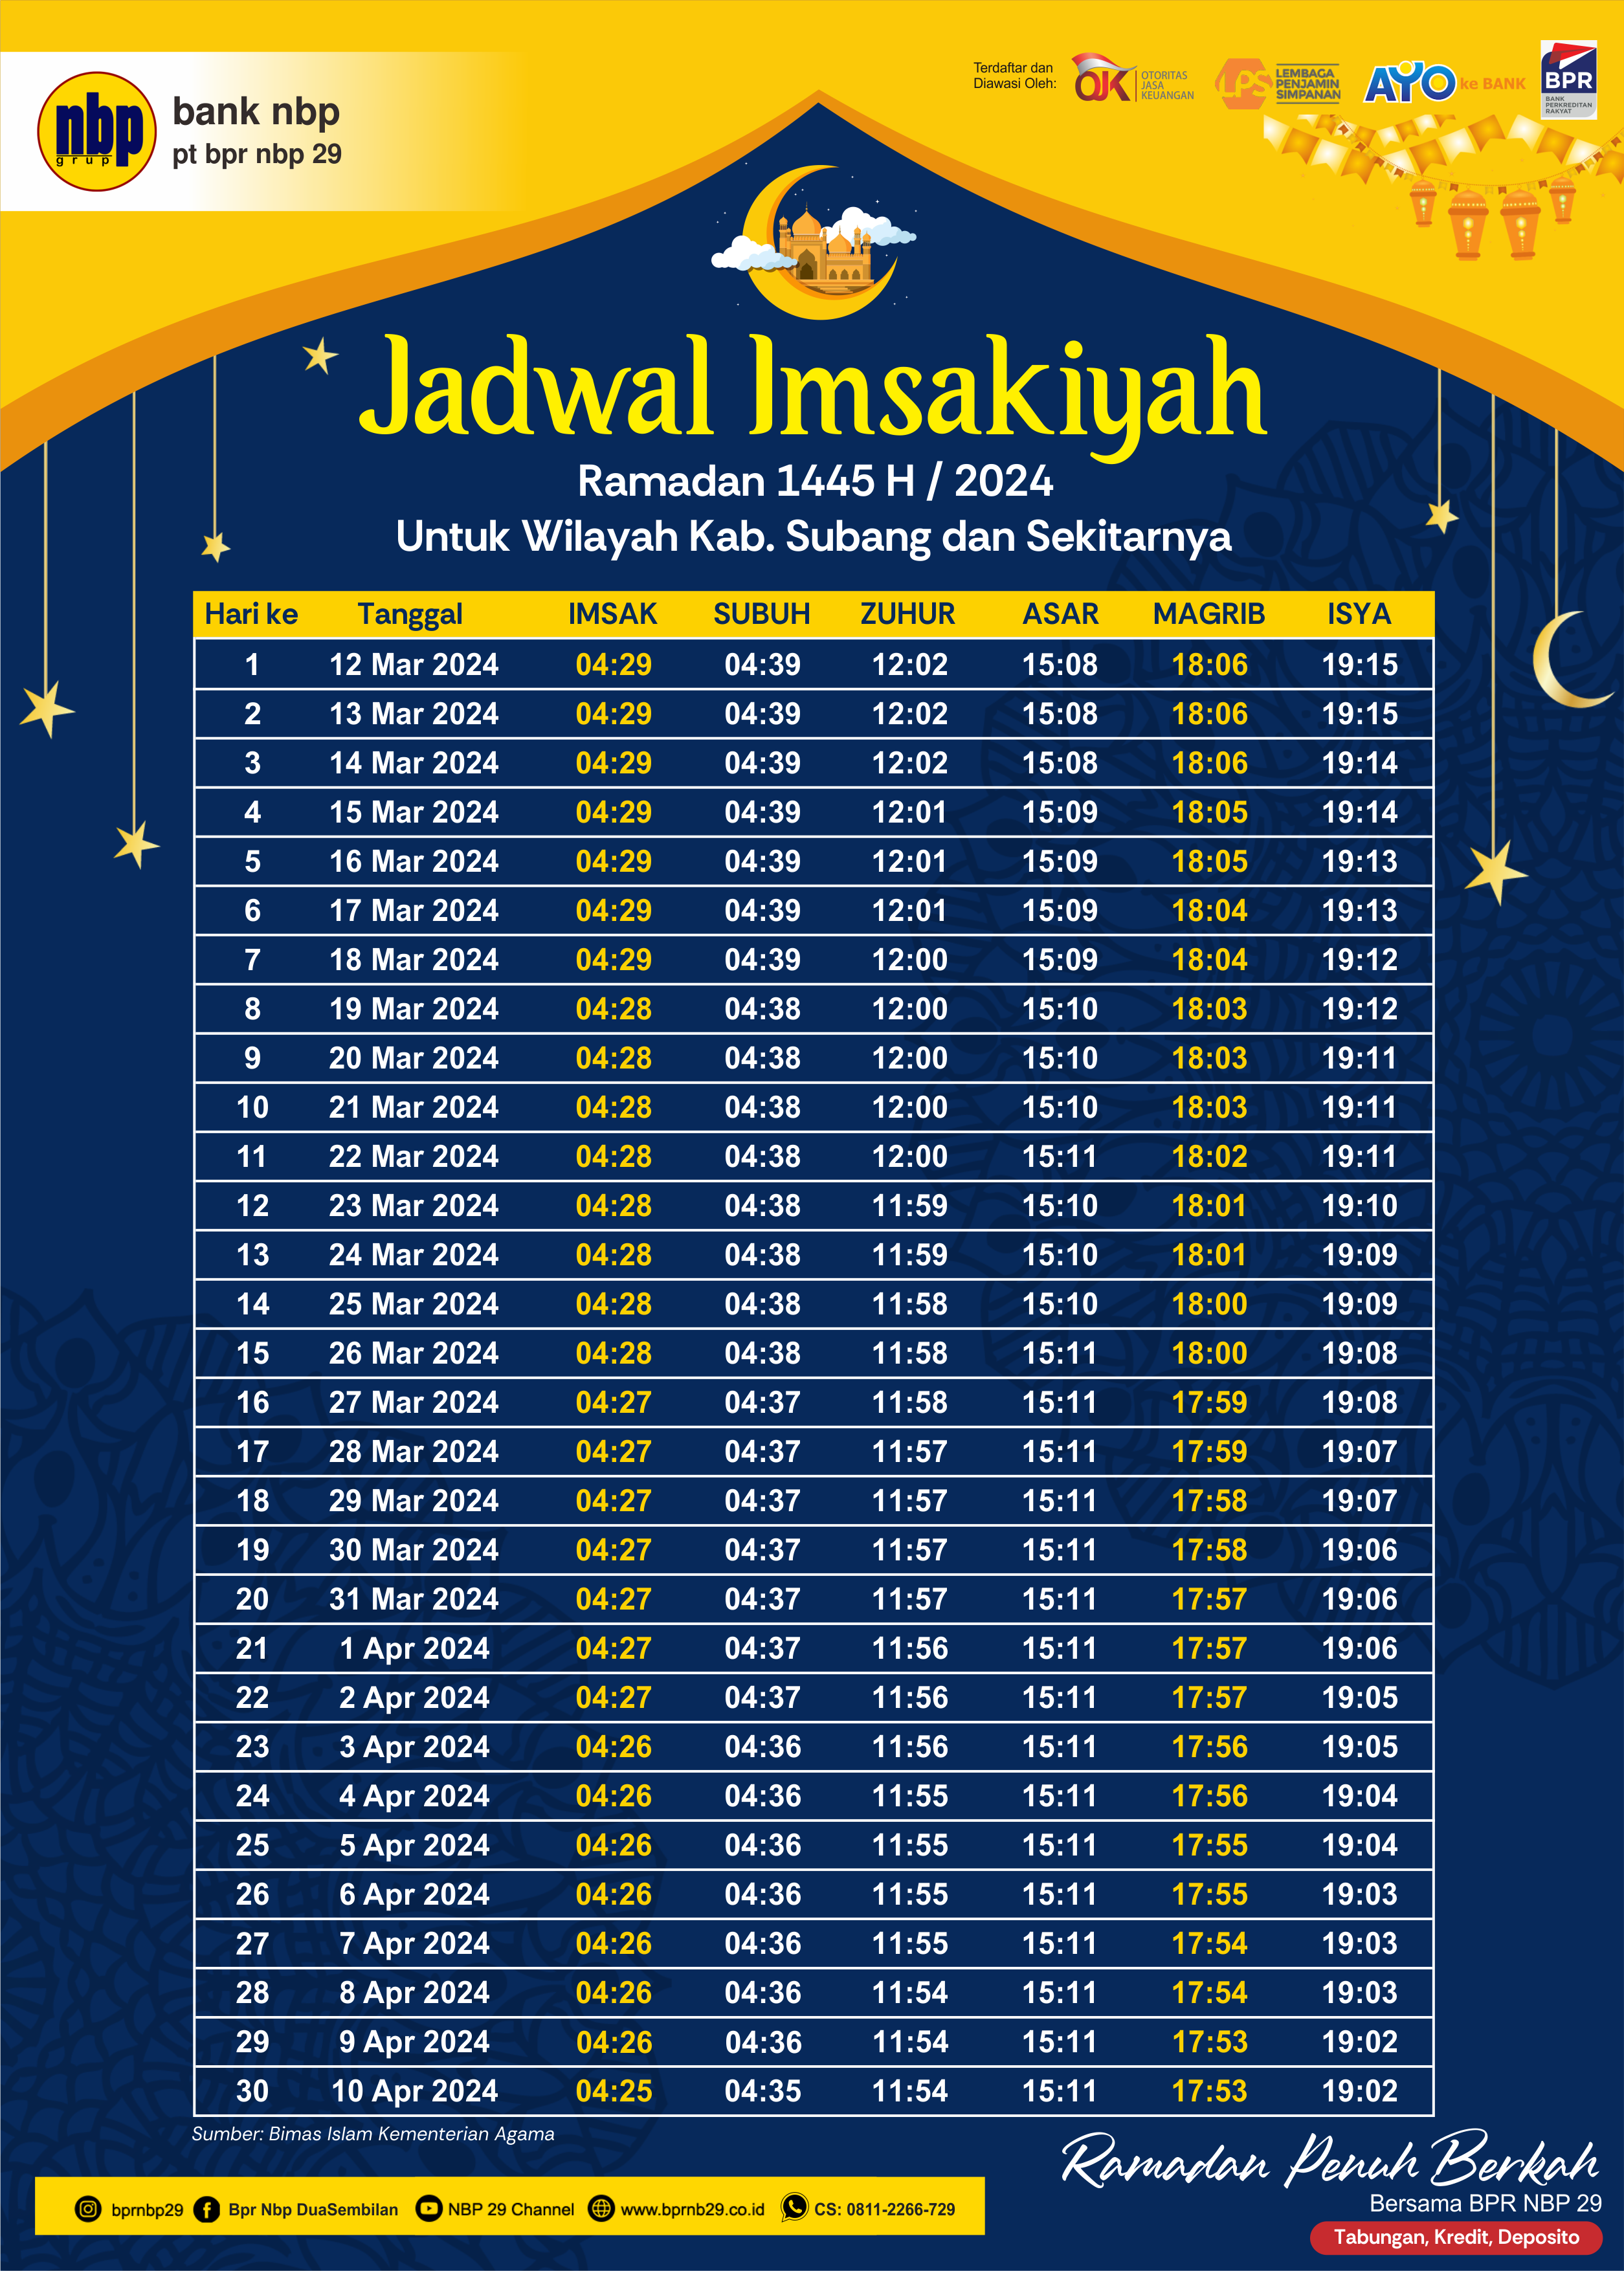 Jadwal Imsakiyah Ramadan 1445 H Wilayah Kab. Subang dan Sekitarnya